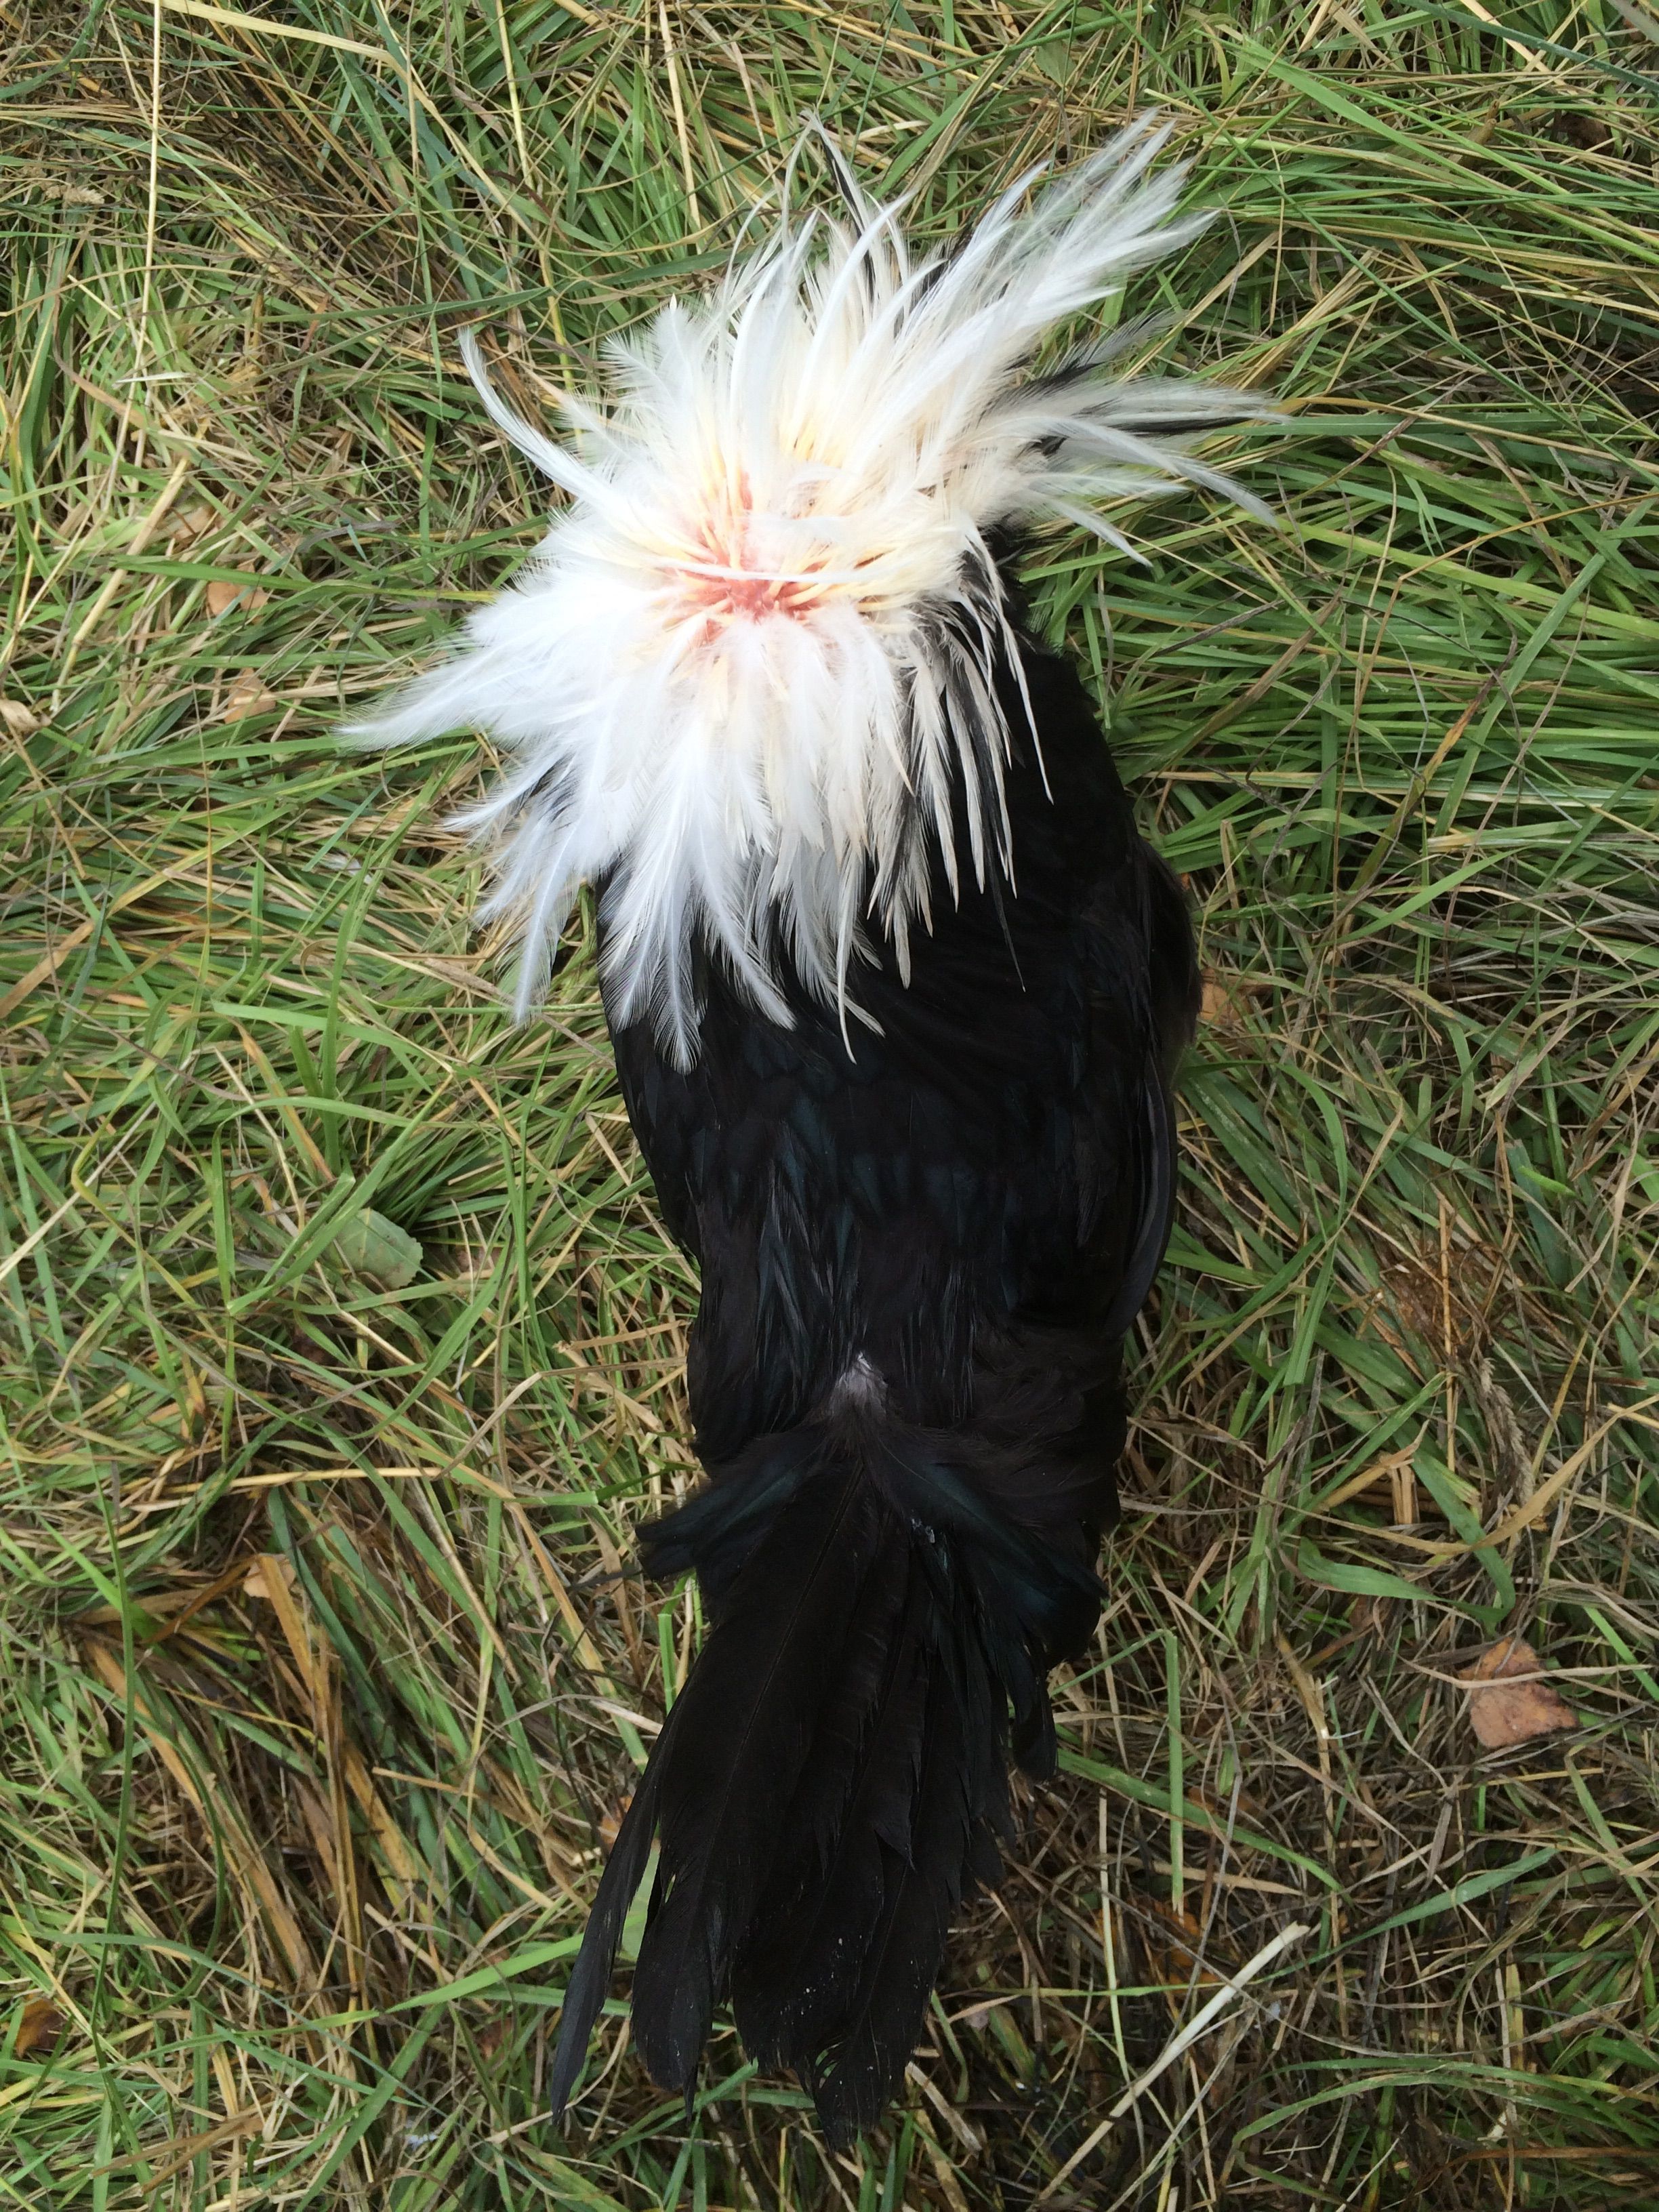 taken September 4. Polish Crested, presumably a rooster.